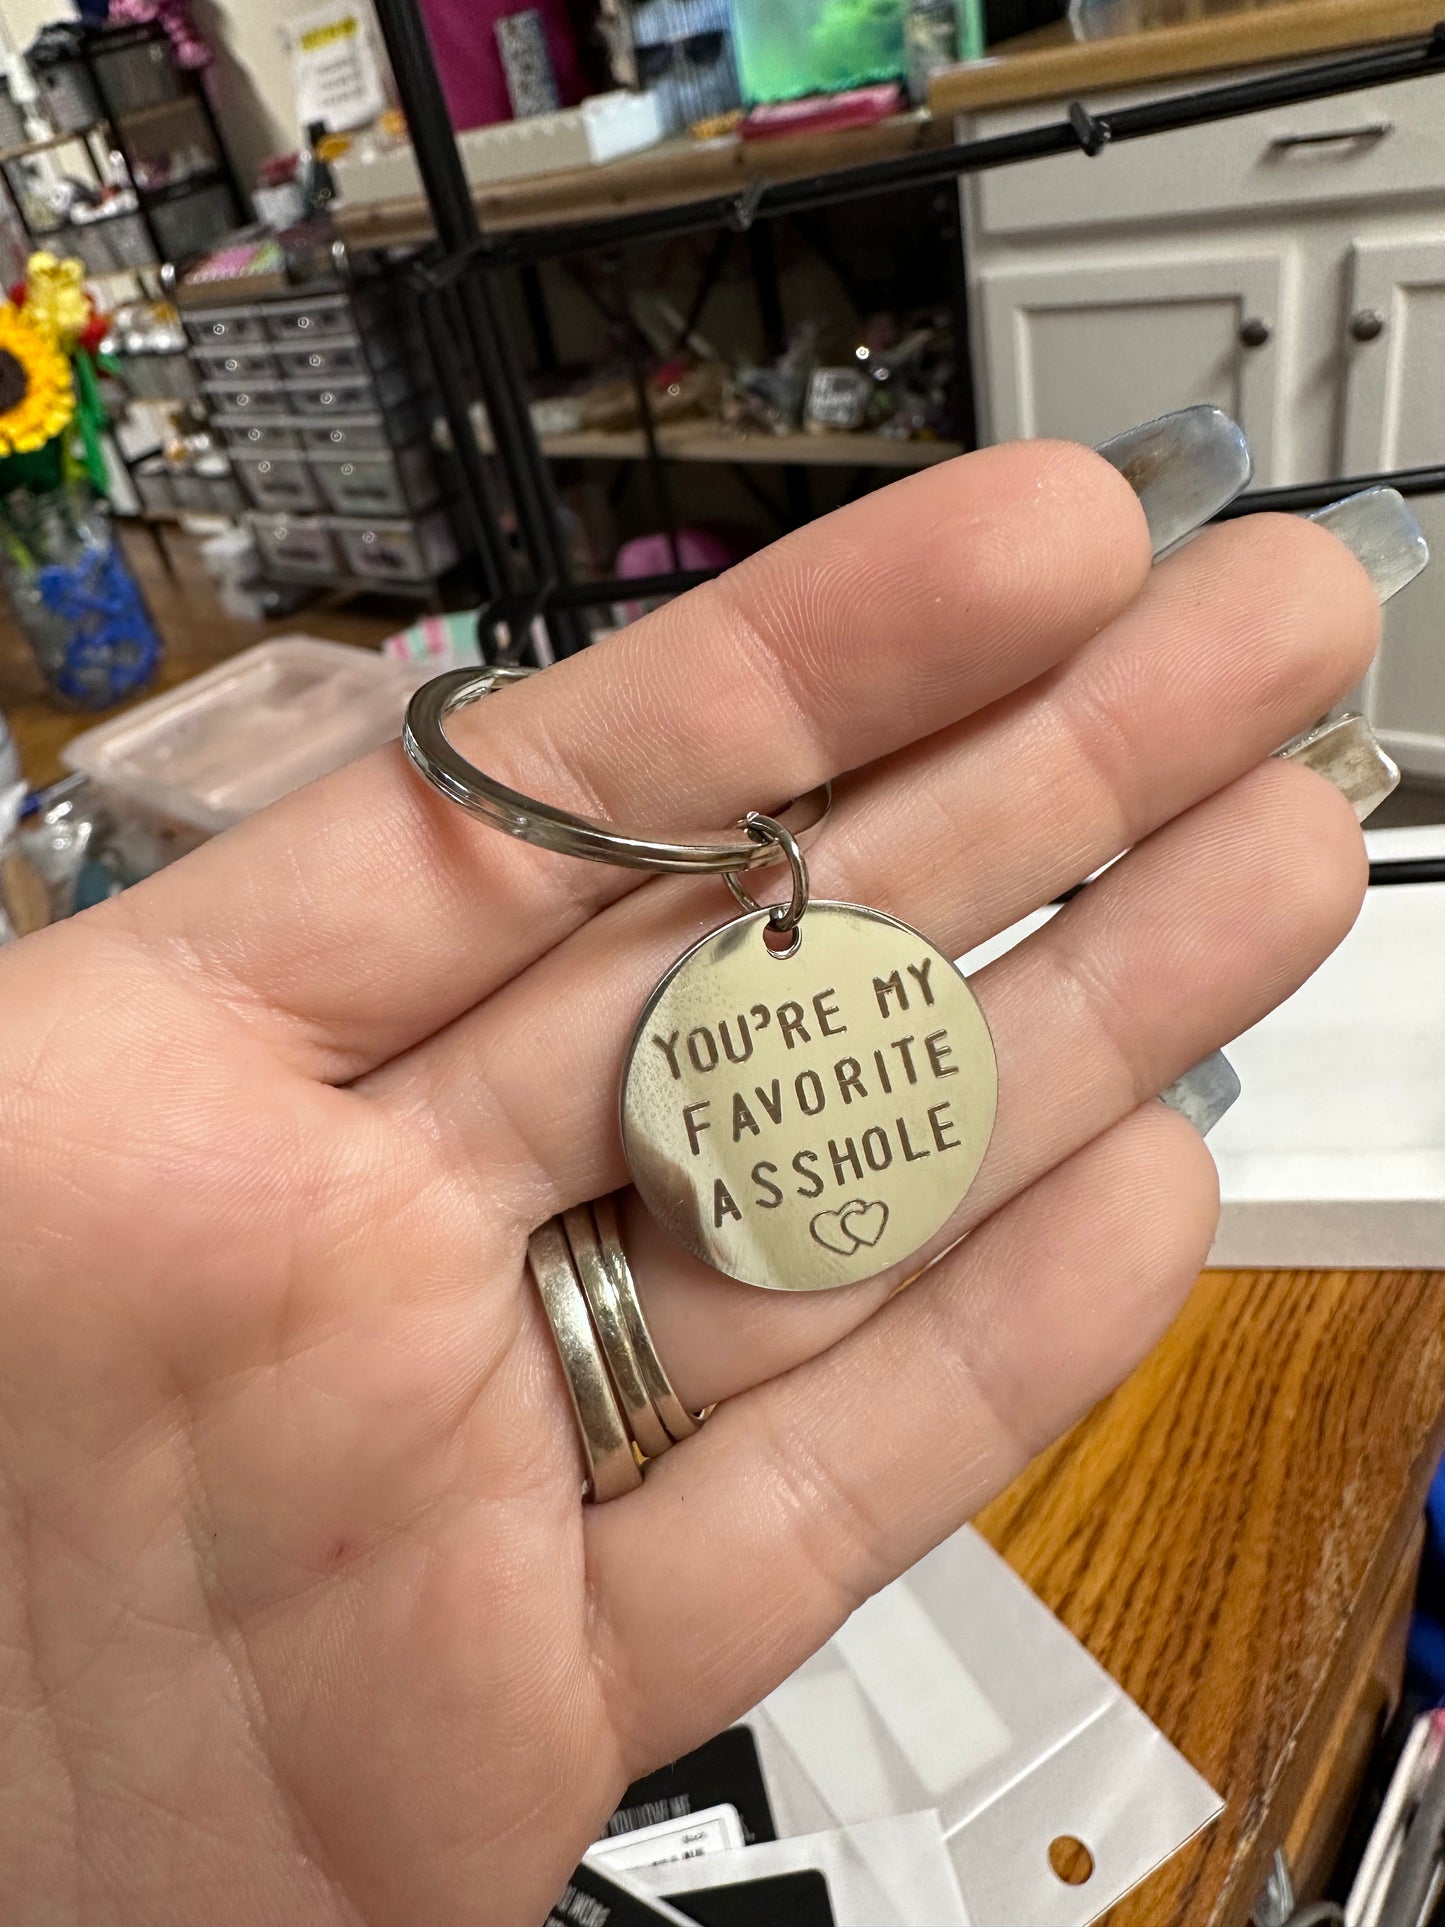 My Favorite Asshole Keychain